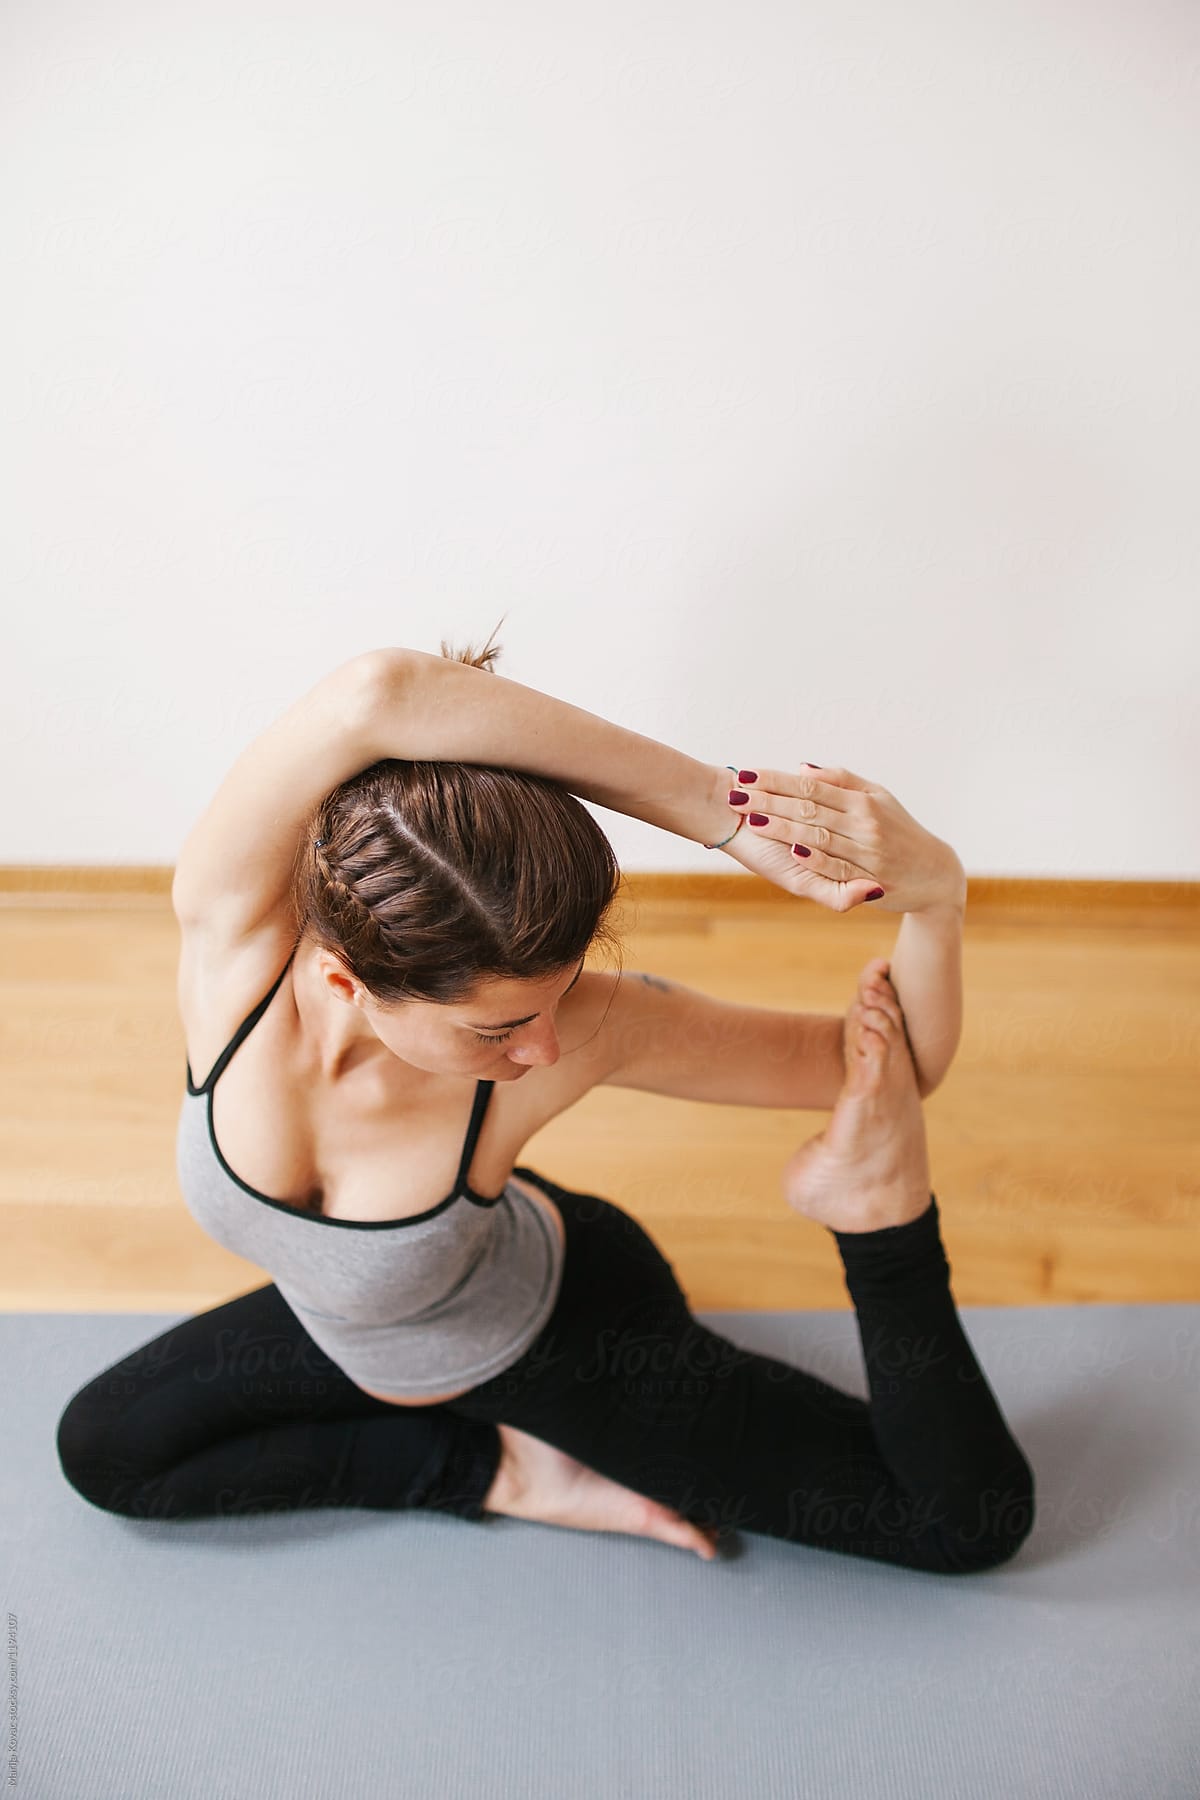 Two Women Doing Yoga Togethera by Stocksy Contributor Marija